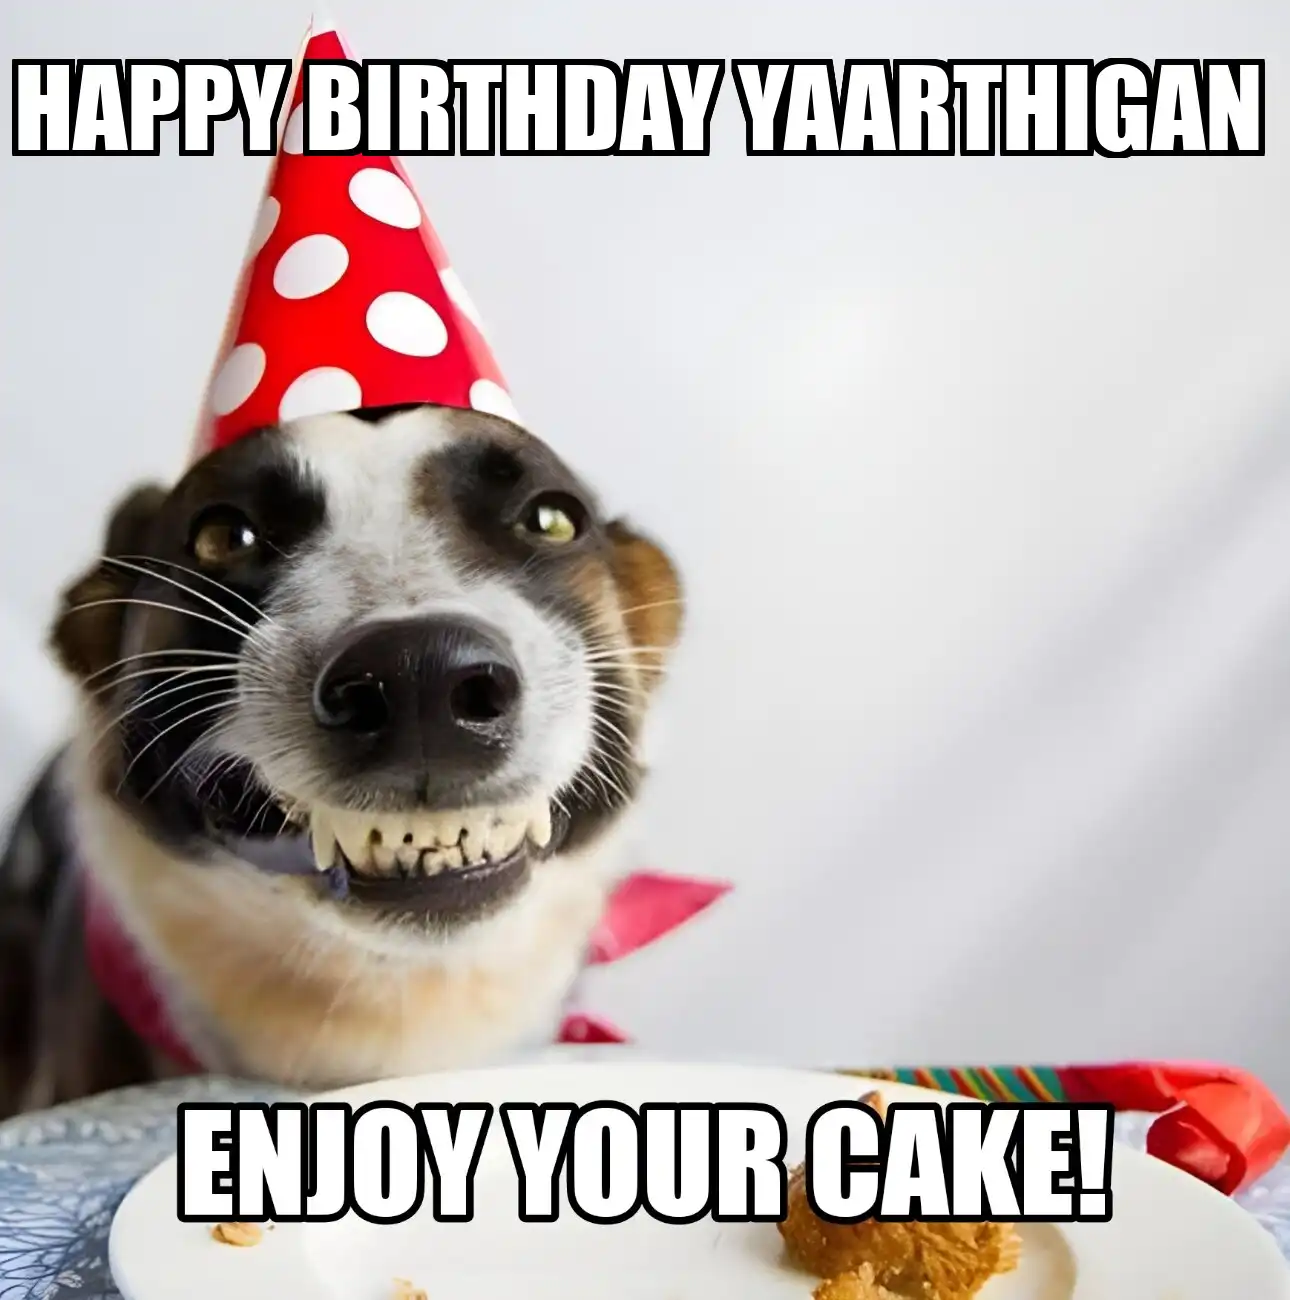 Happy Birthday Yaarthigan Enjoy Your Cake Dog Meme